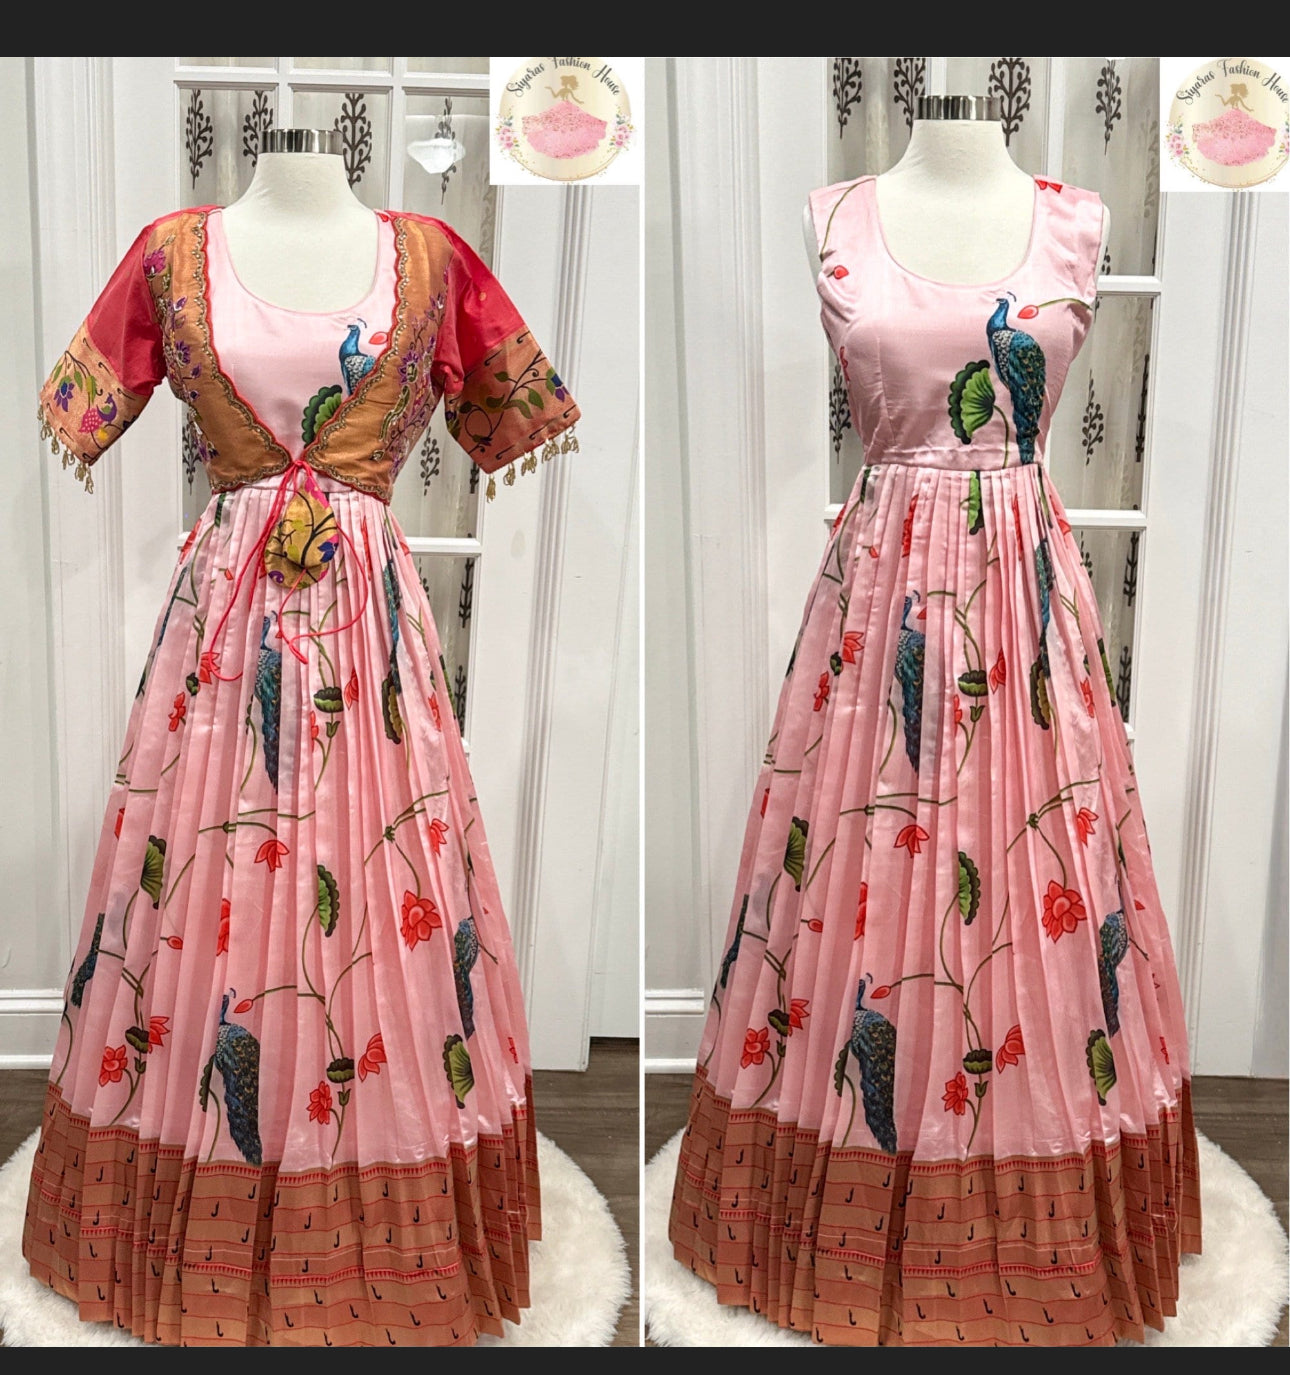 Pink Pethani Kalamkari Banarsi Dress with Pethani Peacock Motif Zari Jacket, featuring glass bead lace and hand embroidery